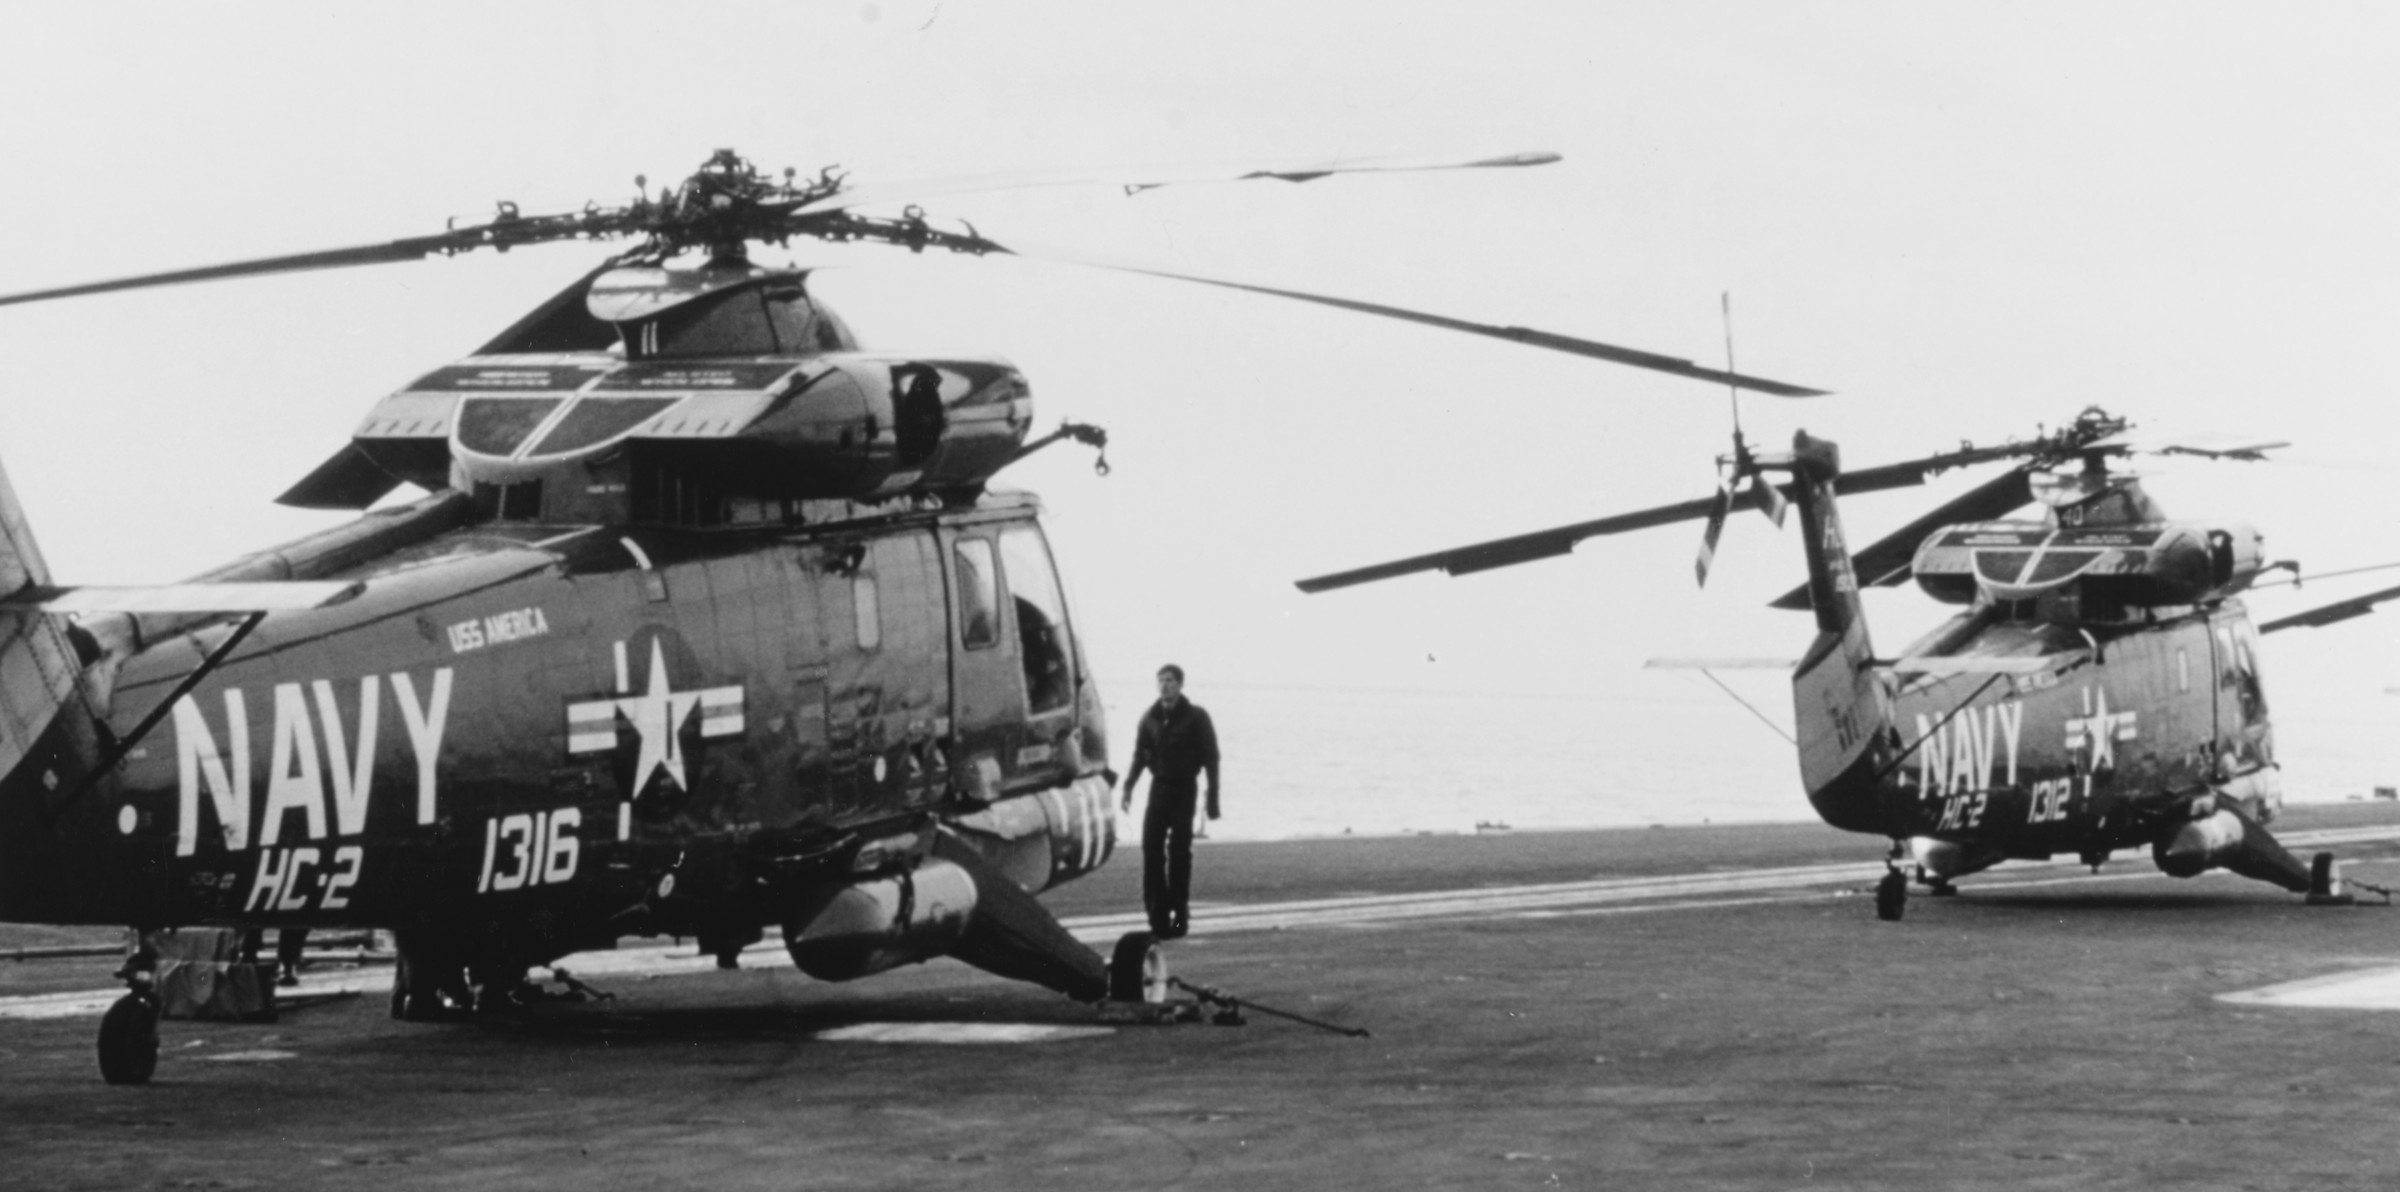 hc-2 fleet angels helicopter combat support squadron us navy uh-2 seasprite 52 uss america cv-66